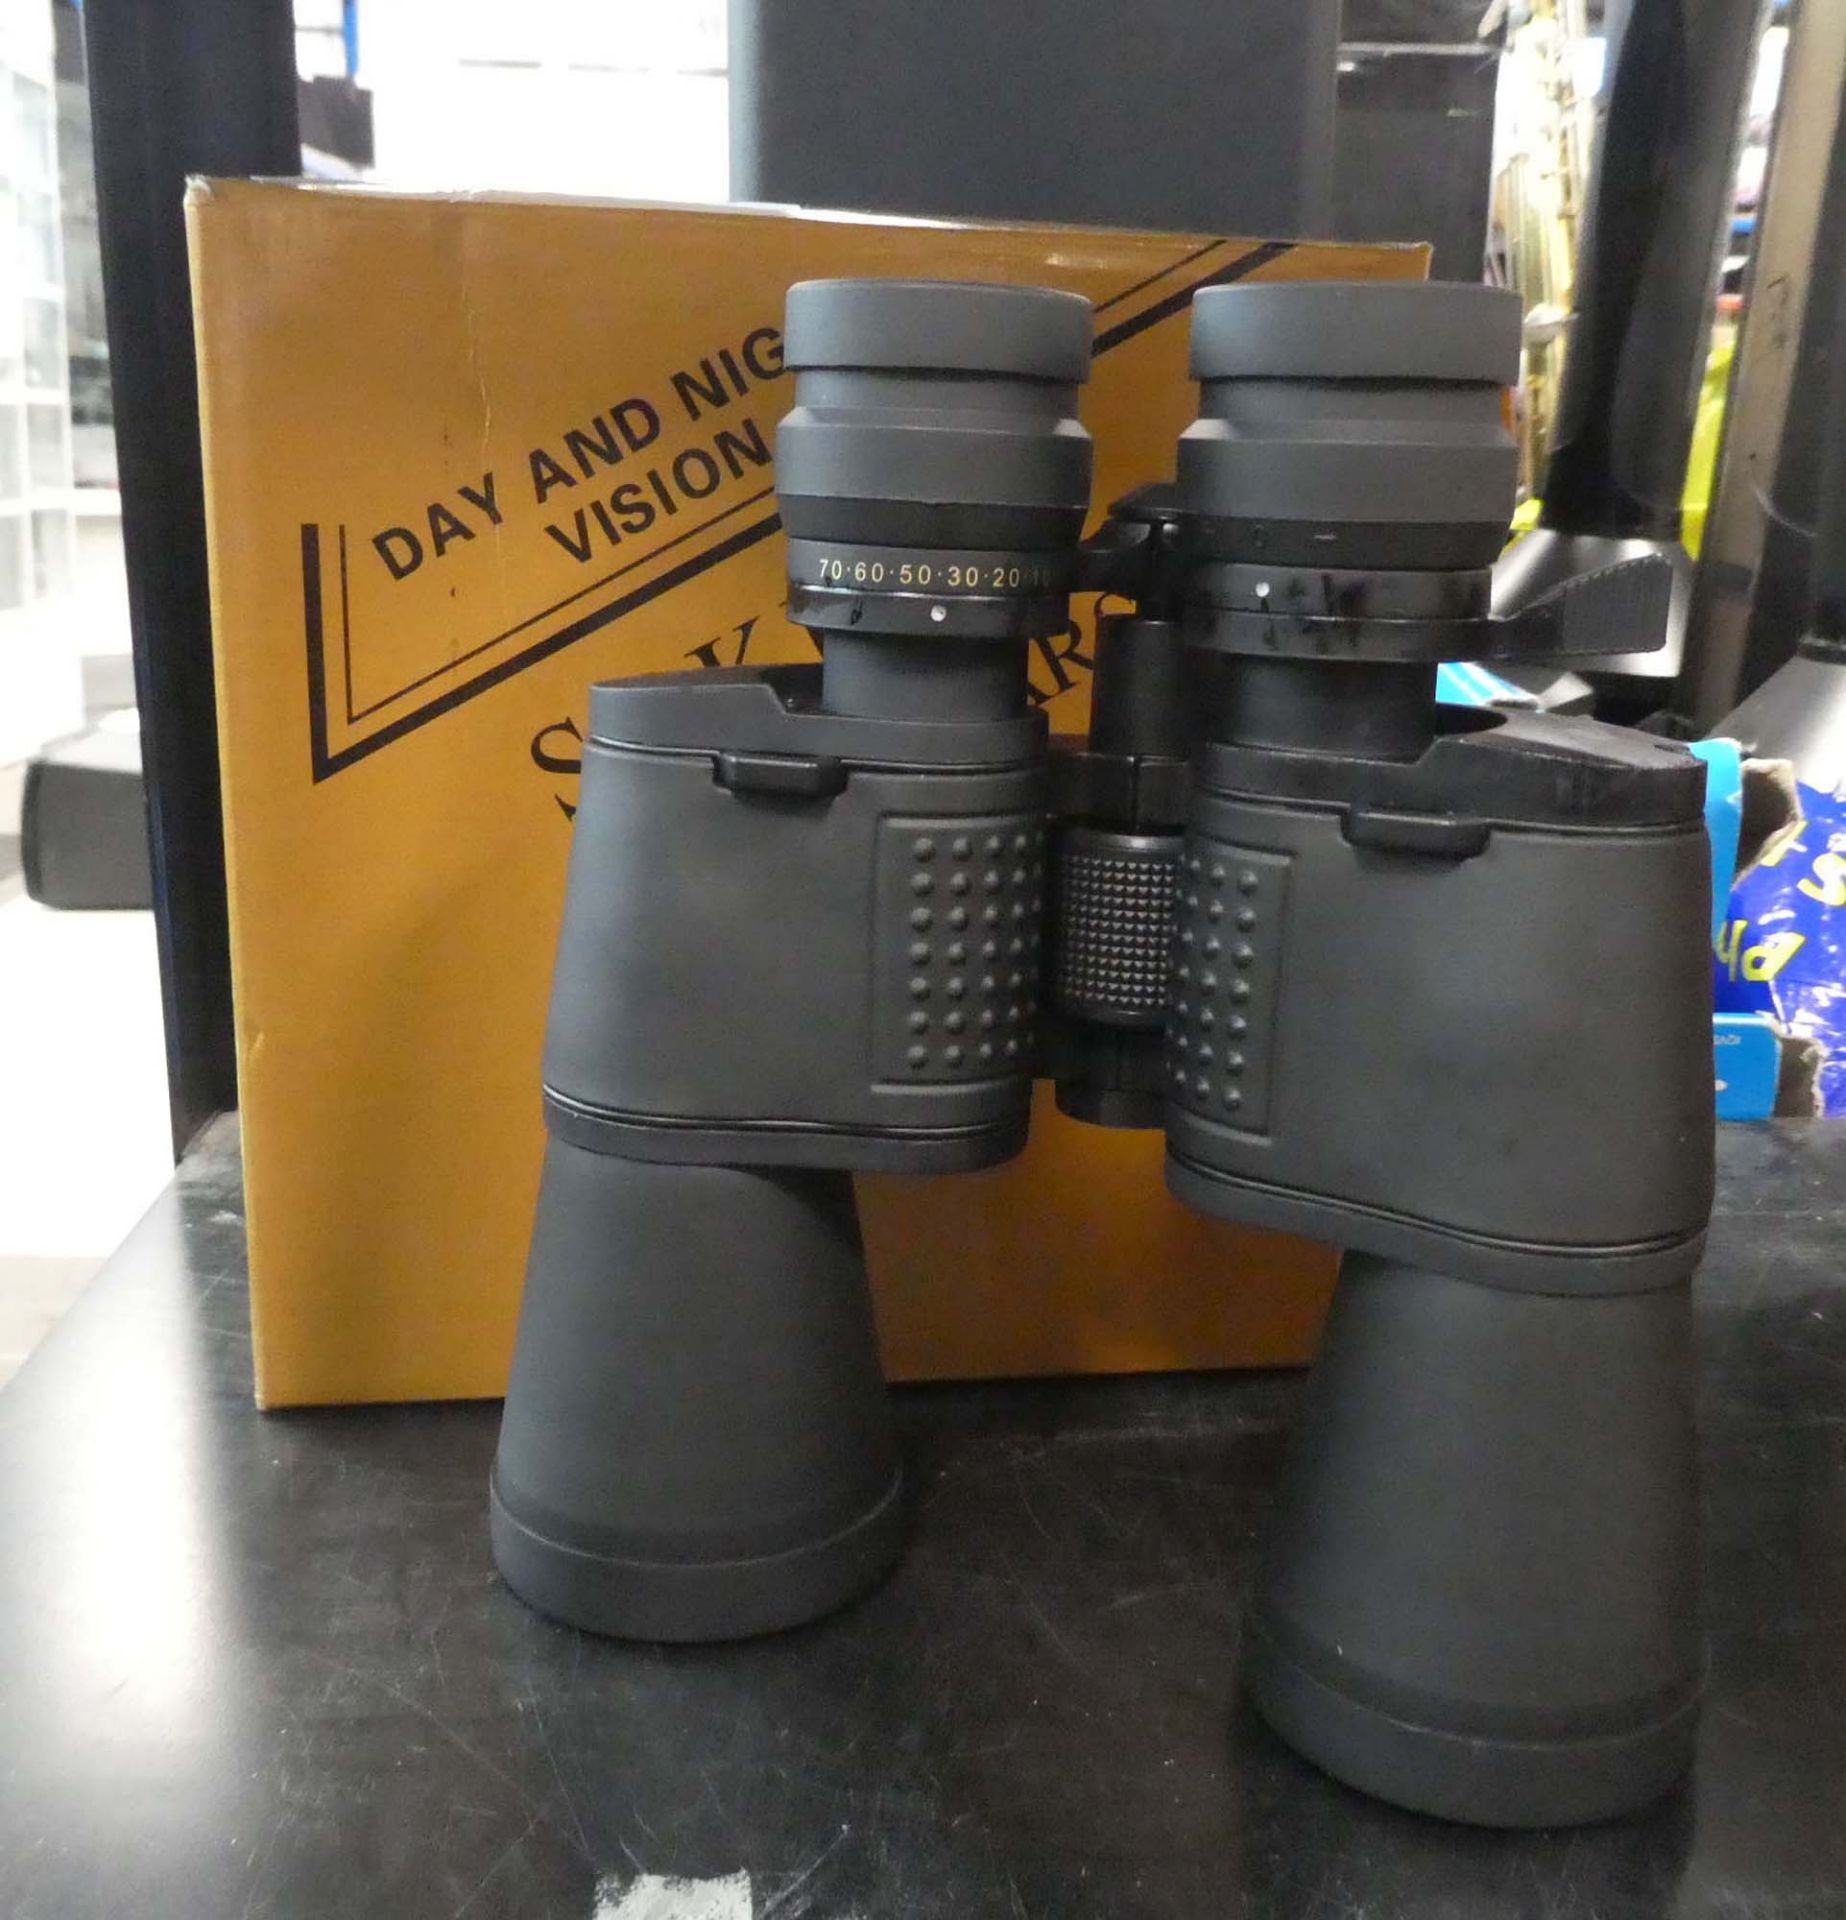 Pair of Sakura day and night vision binoculars in box